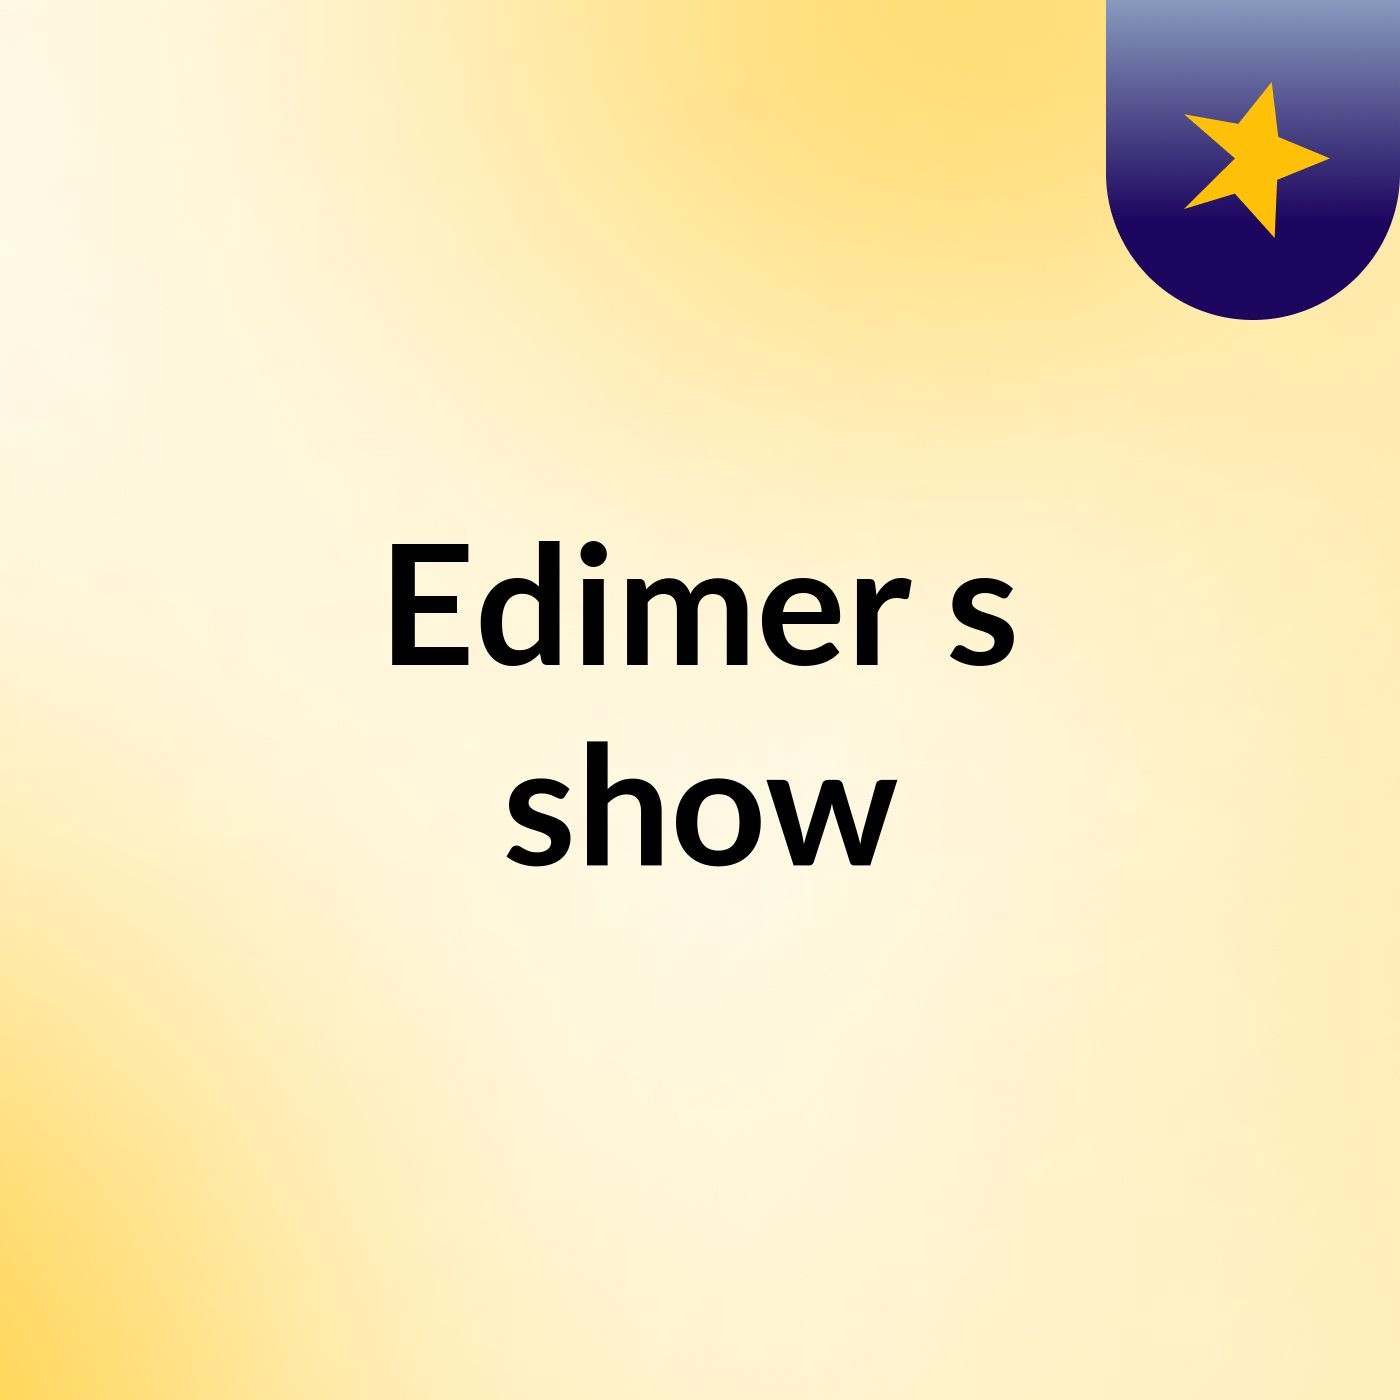 Edimer's show